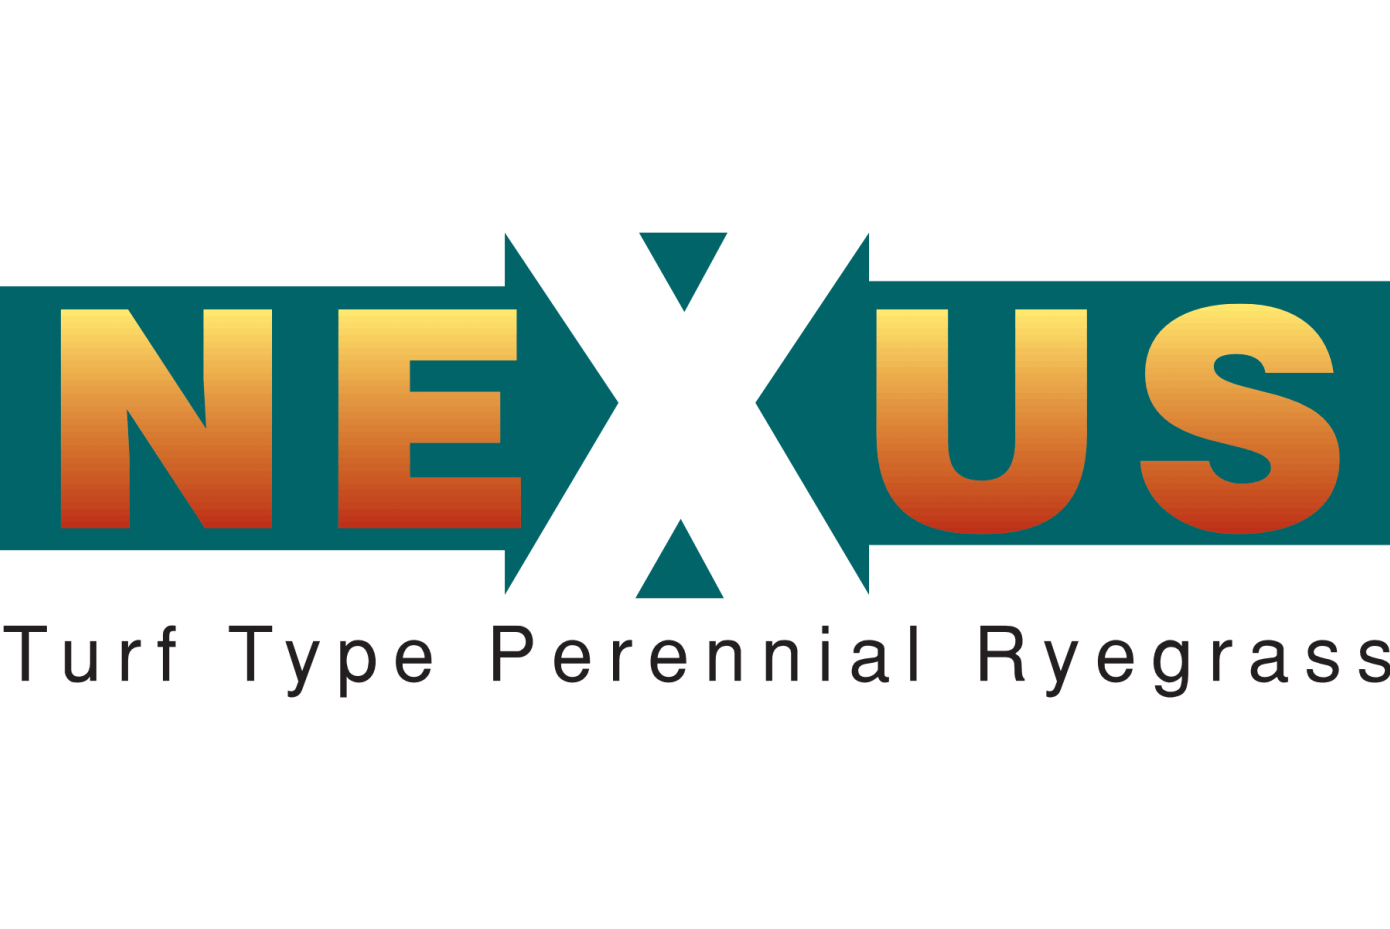 Nexus turf-type perennial ryegrass logo